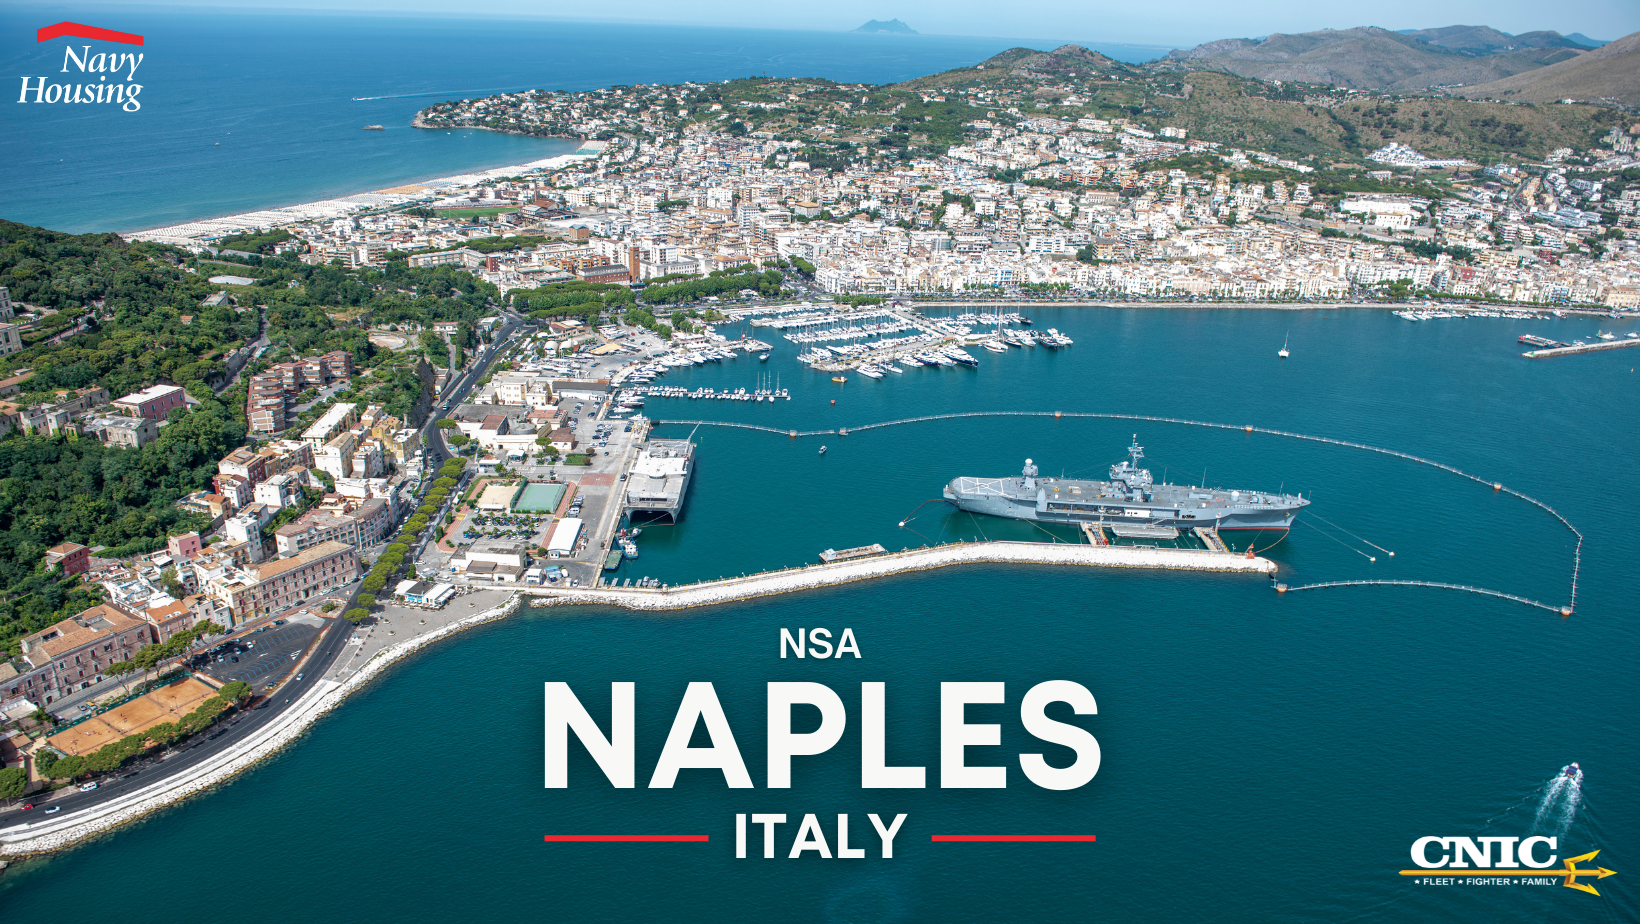 Navy Housing - NSA Naples